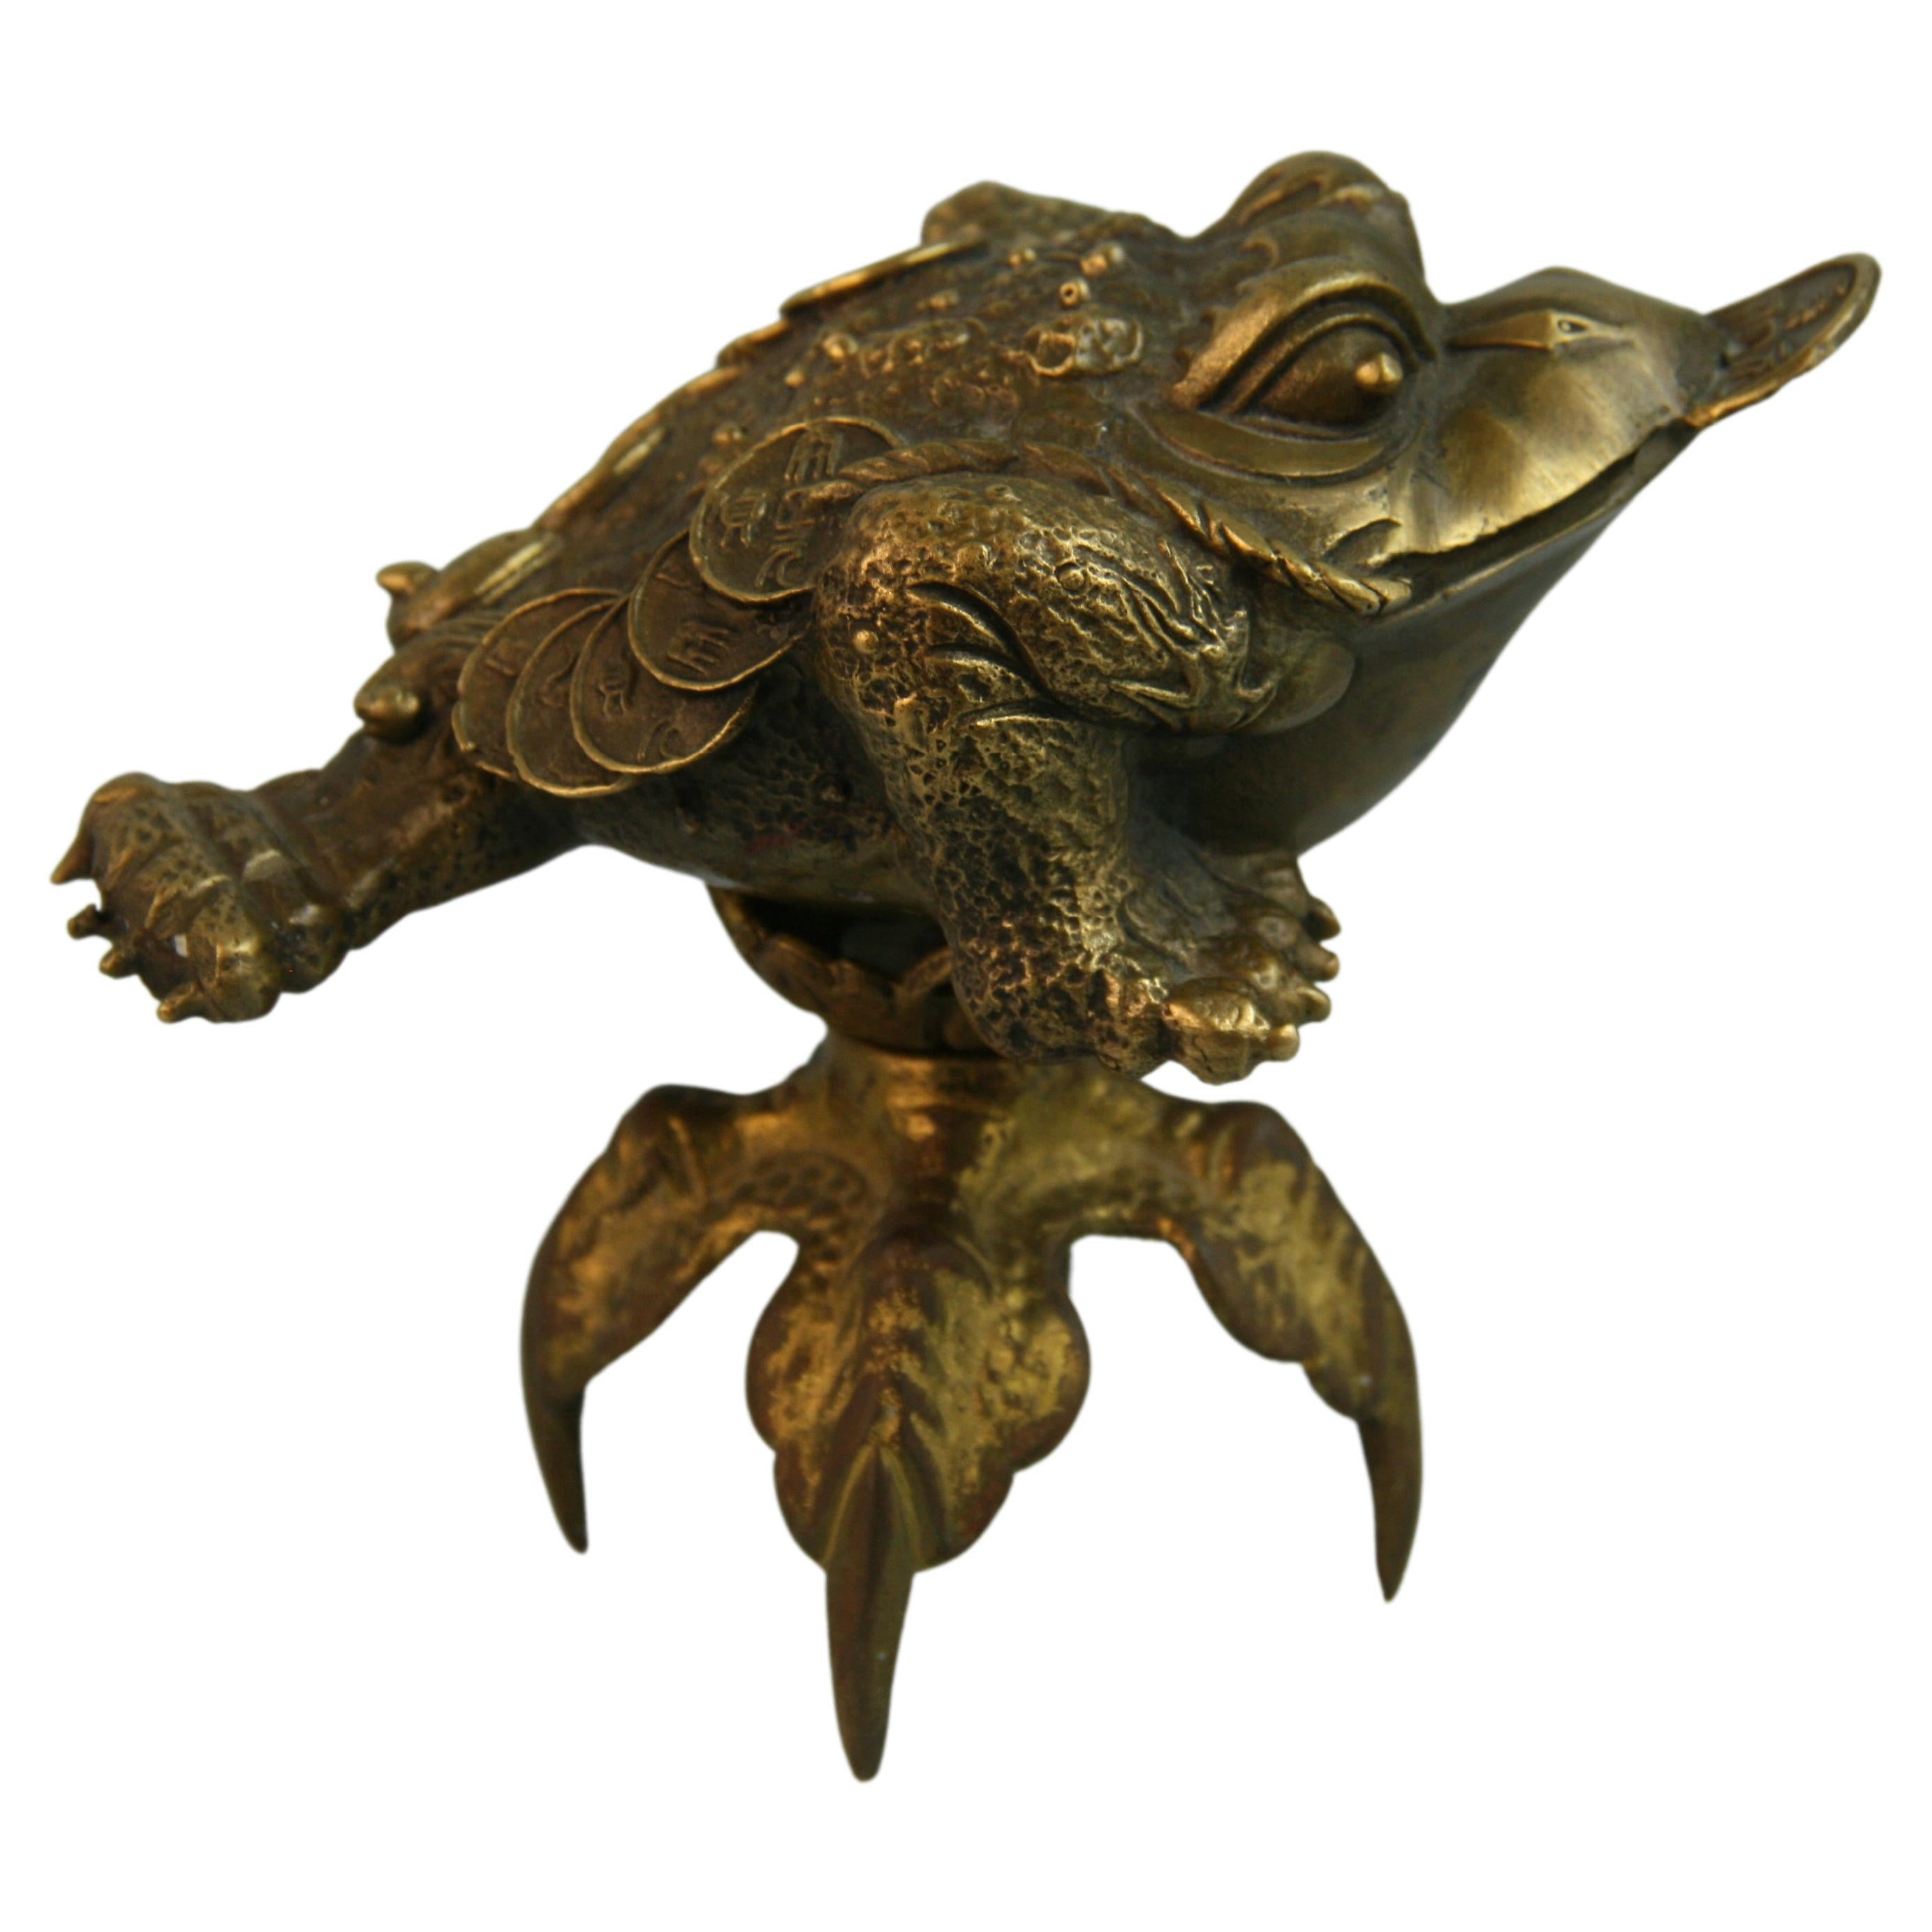 Japanese Jin Chan 'Money Frog' Cast Bronze Sculpture on a Stand